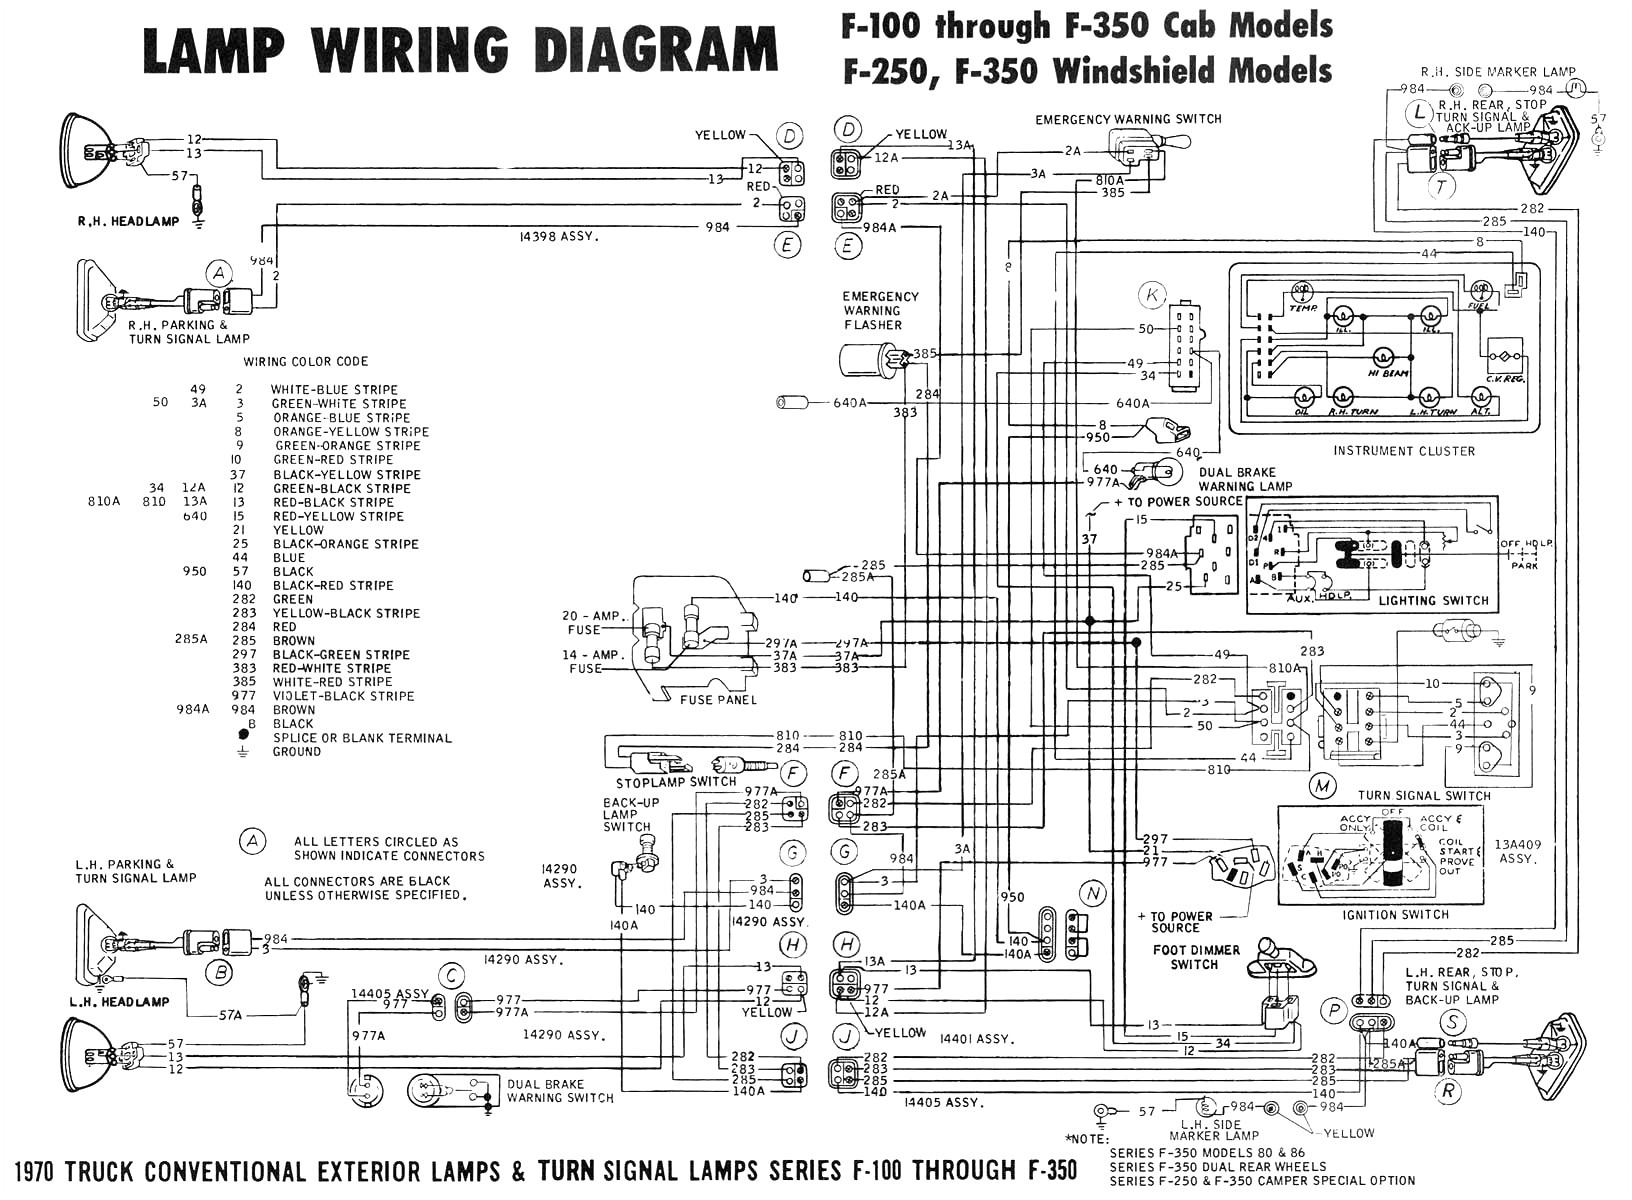 pj trailer wiring problem data wiring diagram preview pj trailer wiring problem east trailer wiring diagram